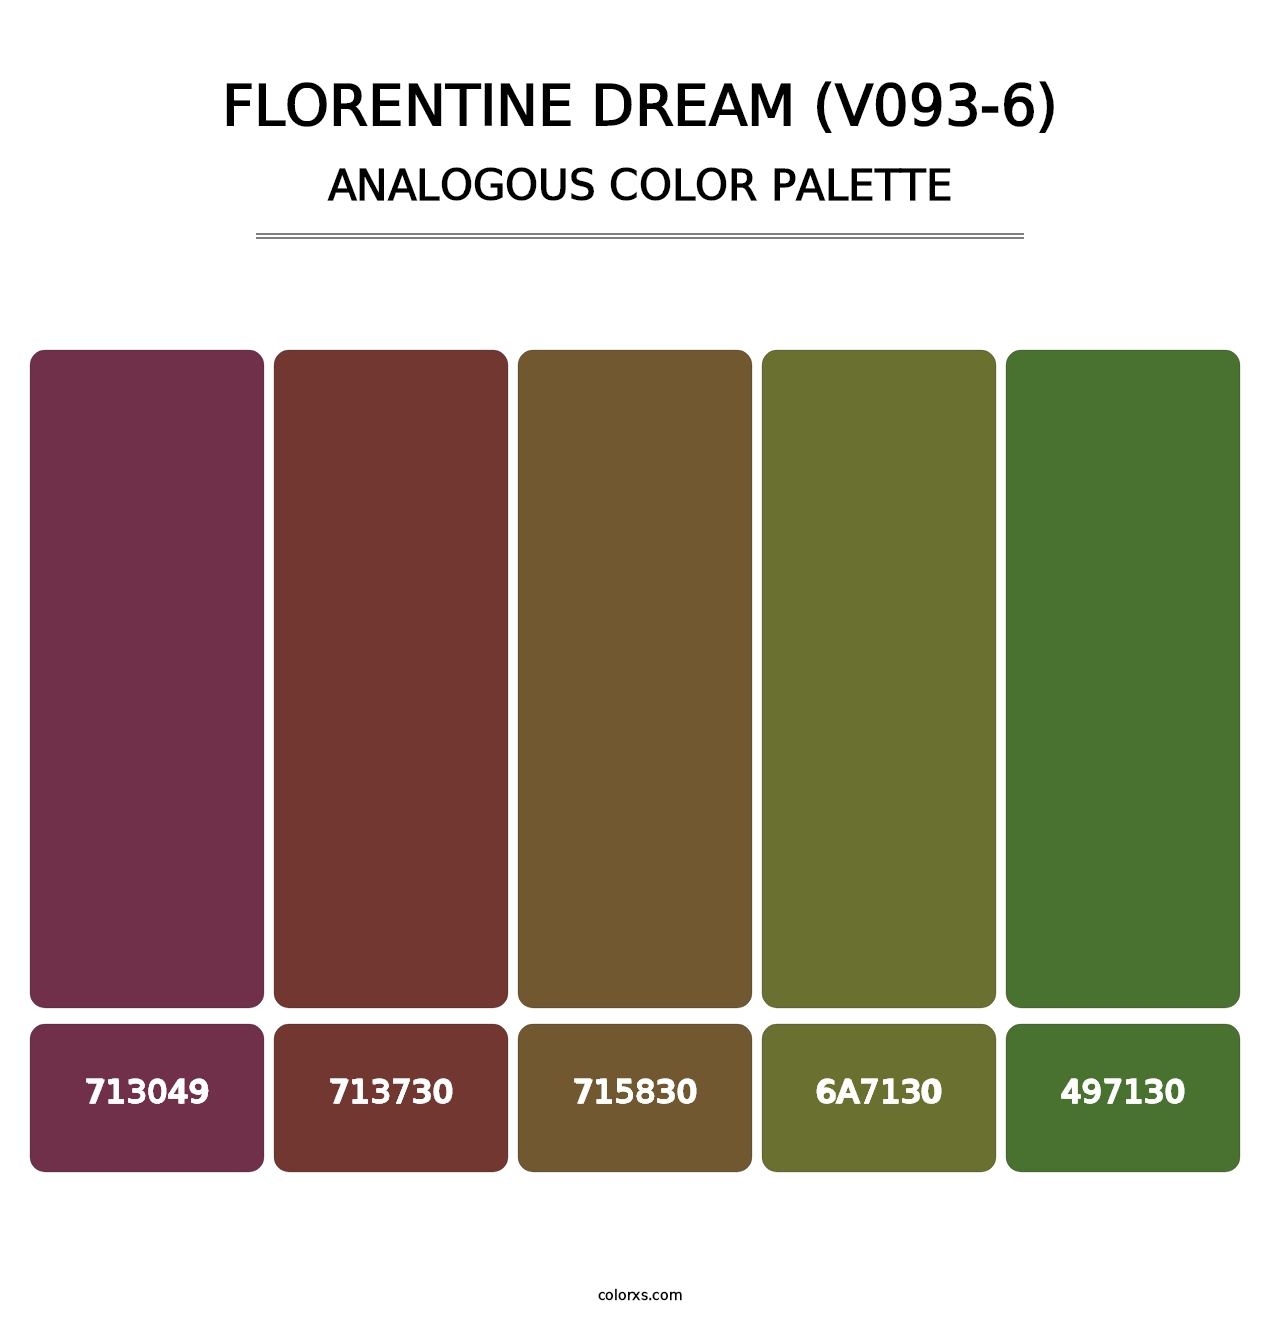 Florentine Dream (V093-6) - Analogous Color Palette